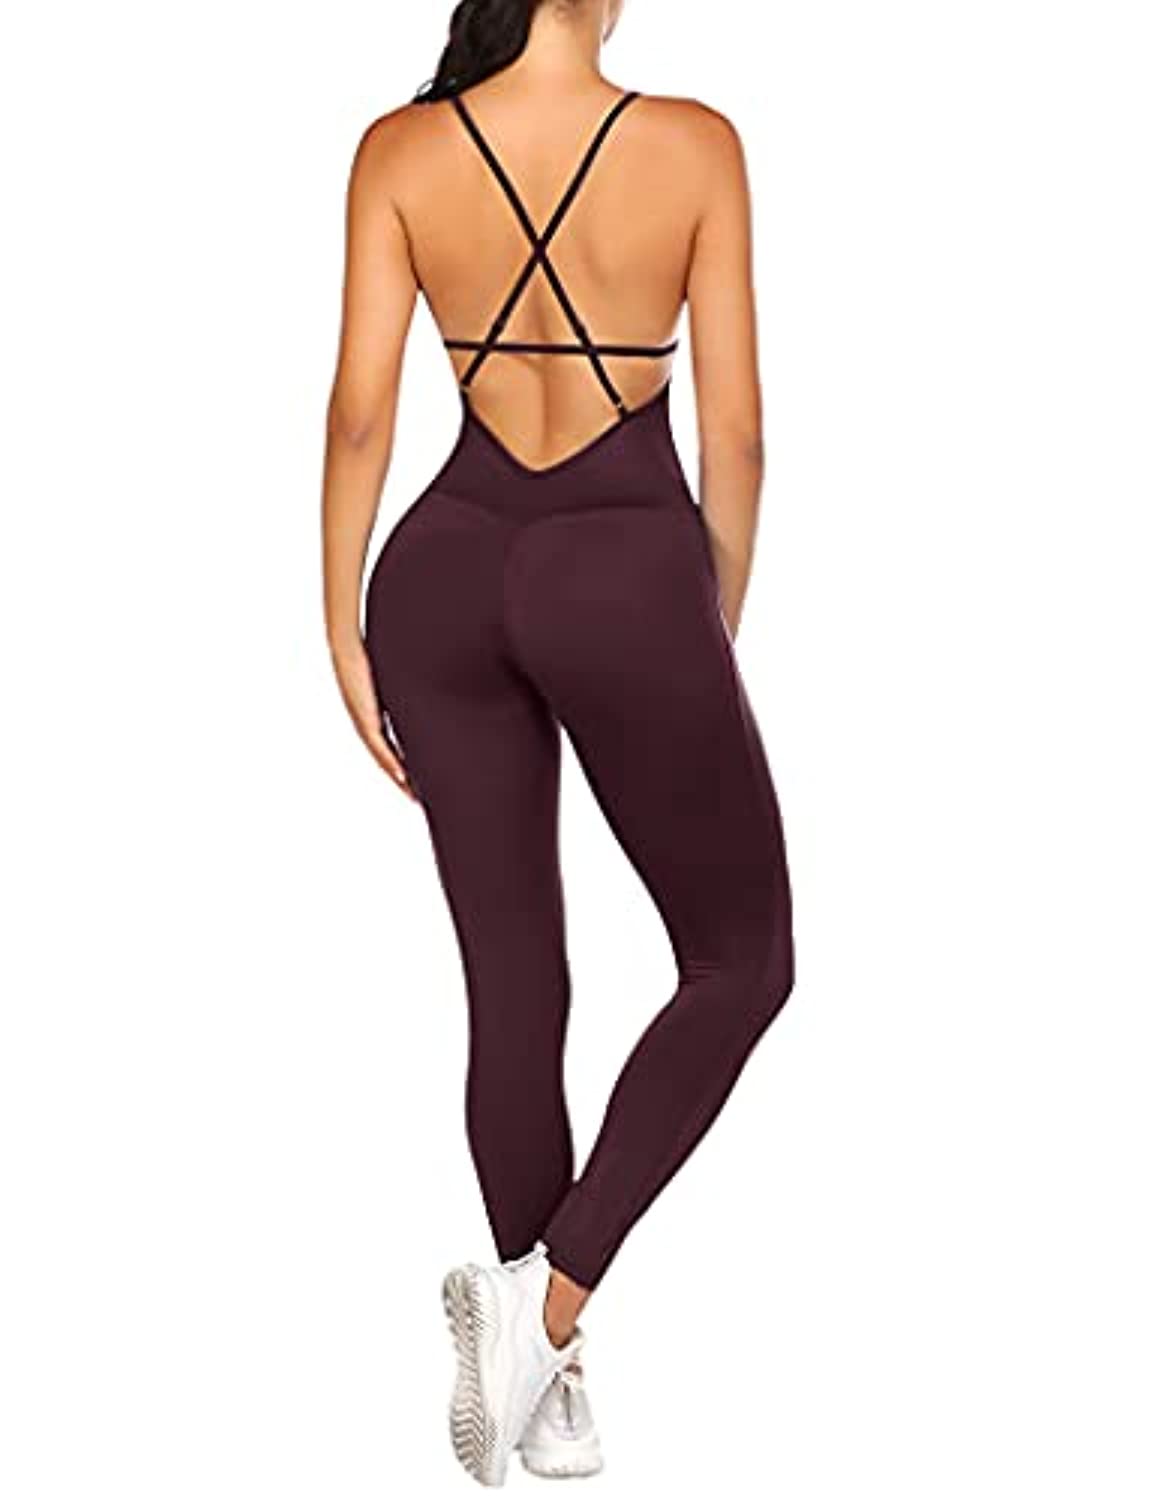 COOrun Women One Piece Activewear Butt Lift Blackless Yoga Pants Bodycon Jumpsuit Fitness Workout Sport Gym Yoga Bodysuit-Wine Red